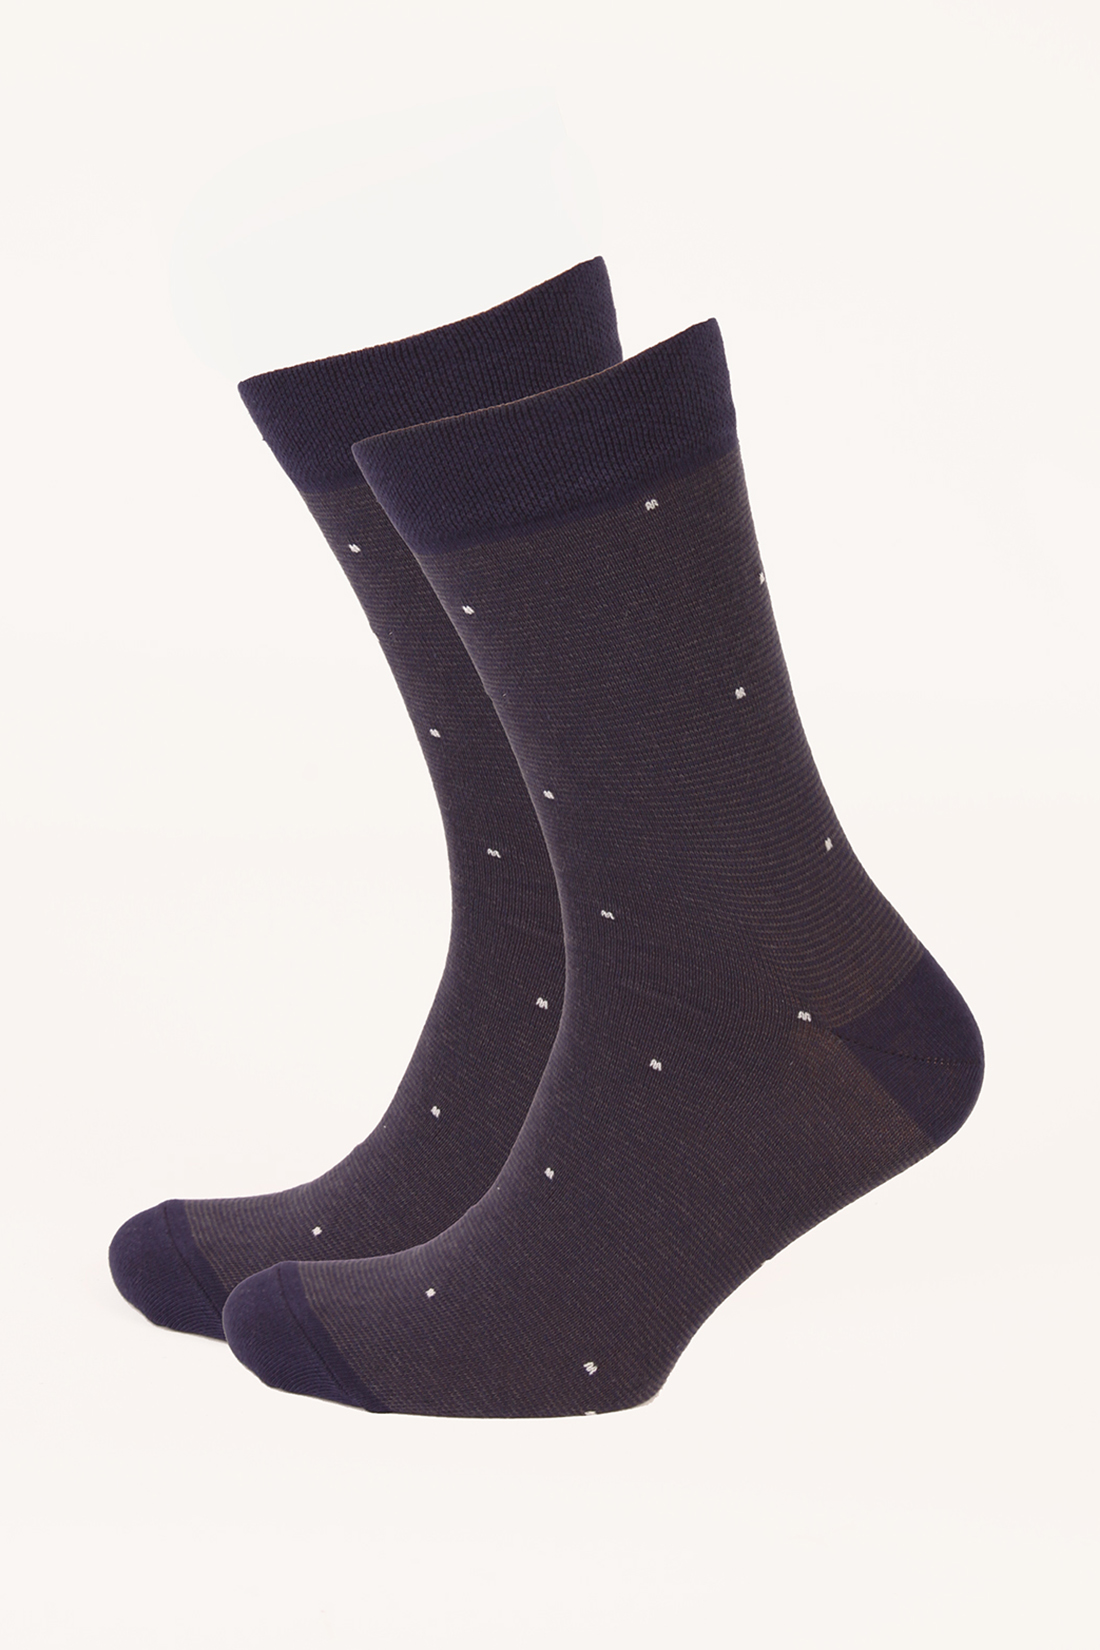 Мужские носки, 2 пары (арт. baon B891109), размер 40/42, цвет синий